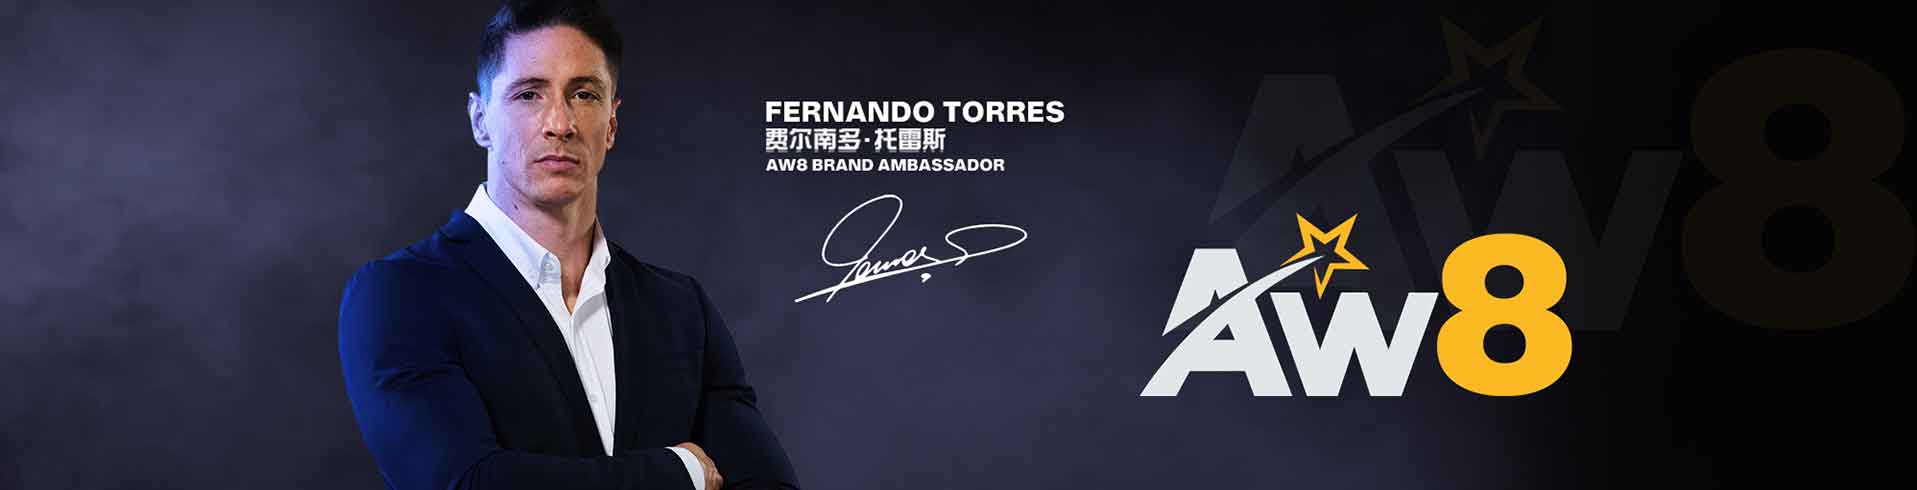 AW8 Fernando Torres Banner